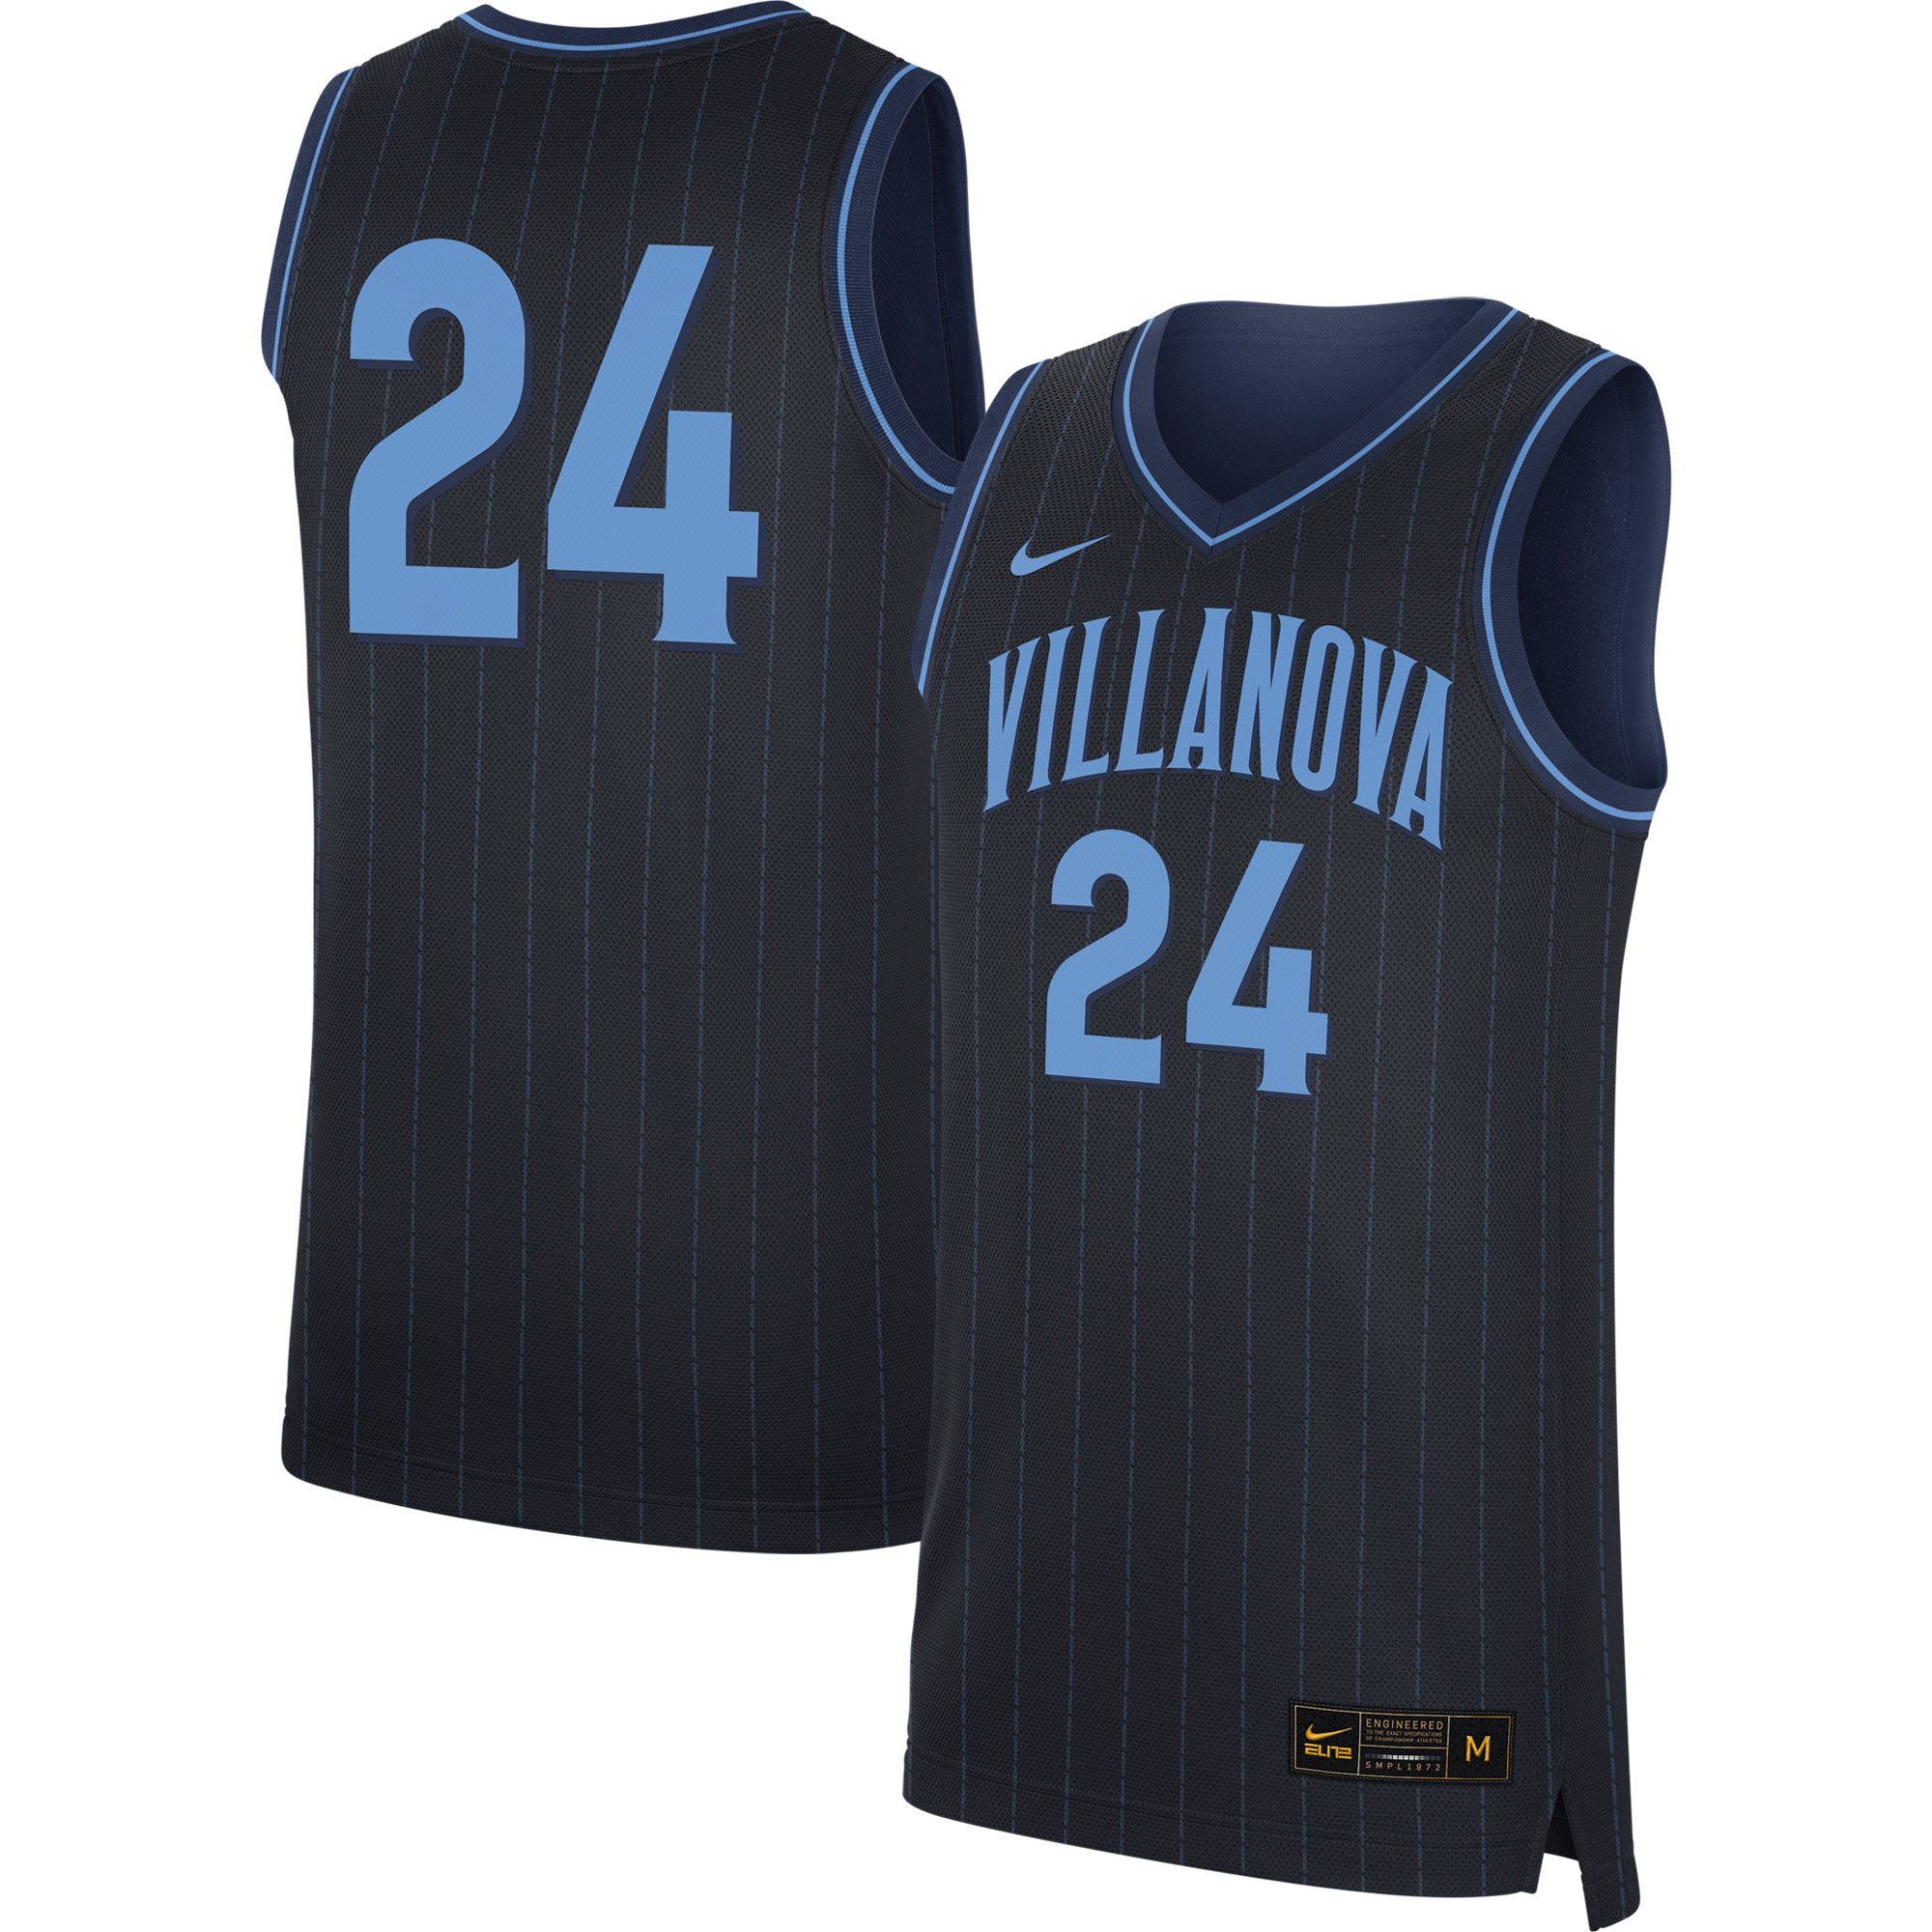 #24 Villanova Wildcats Replica Basketball Jersey - Navy For Youth Women Men